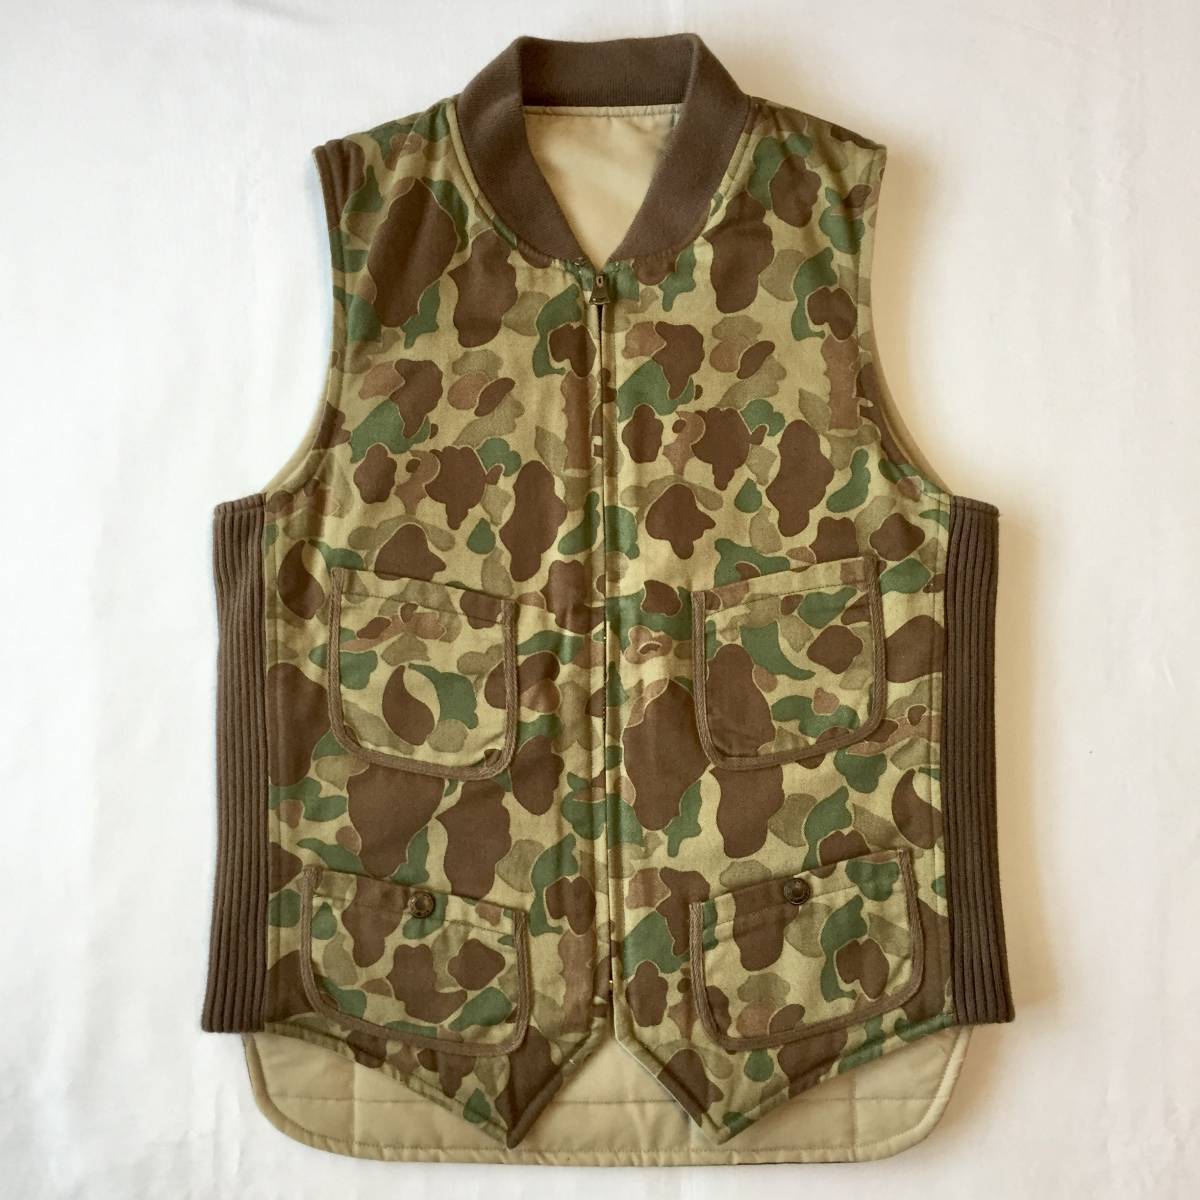 J.S HOMESTEAD Camouflage Reversible vest ジャーナルスタンダード ホームステッド 迷彩柄 リバーシブルベスト S 中綿 ダックハンターカモ